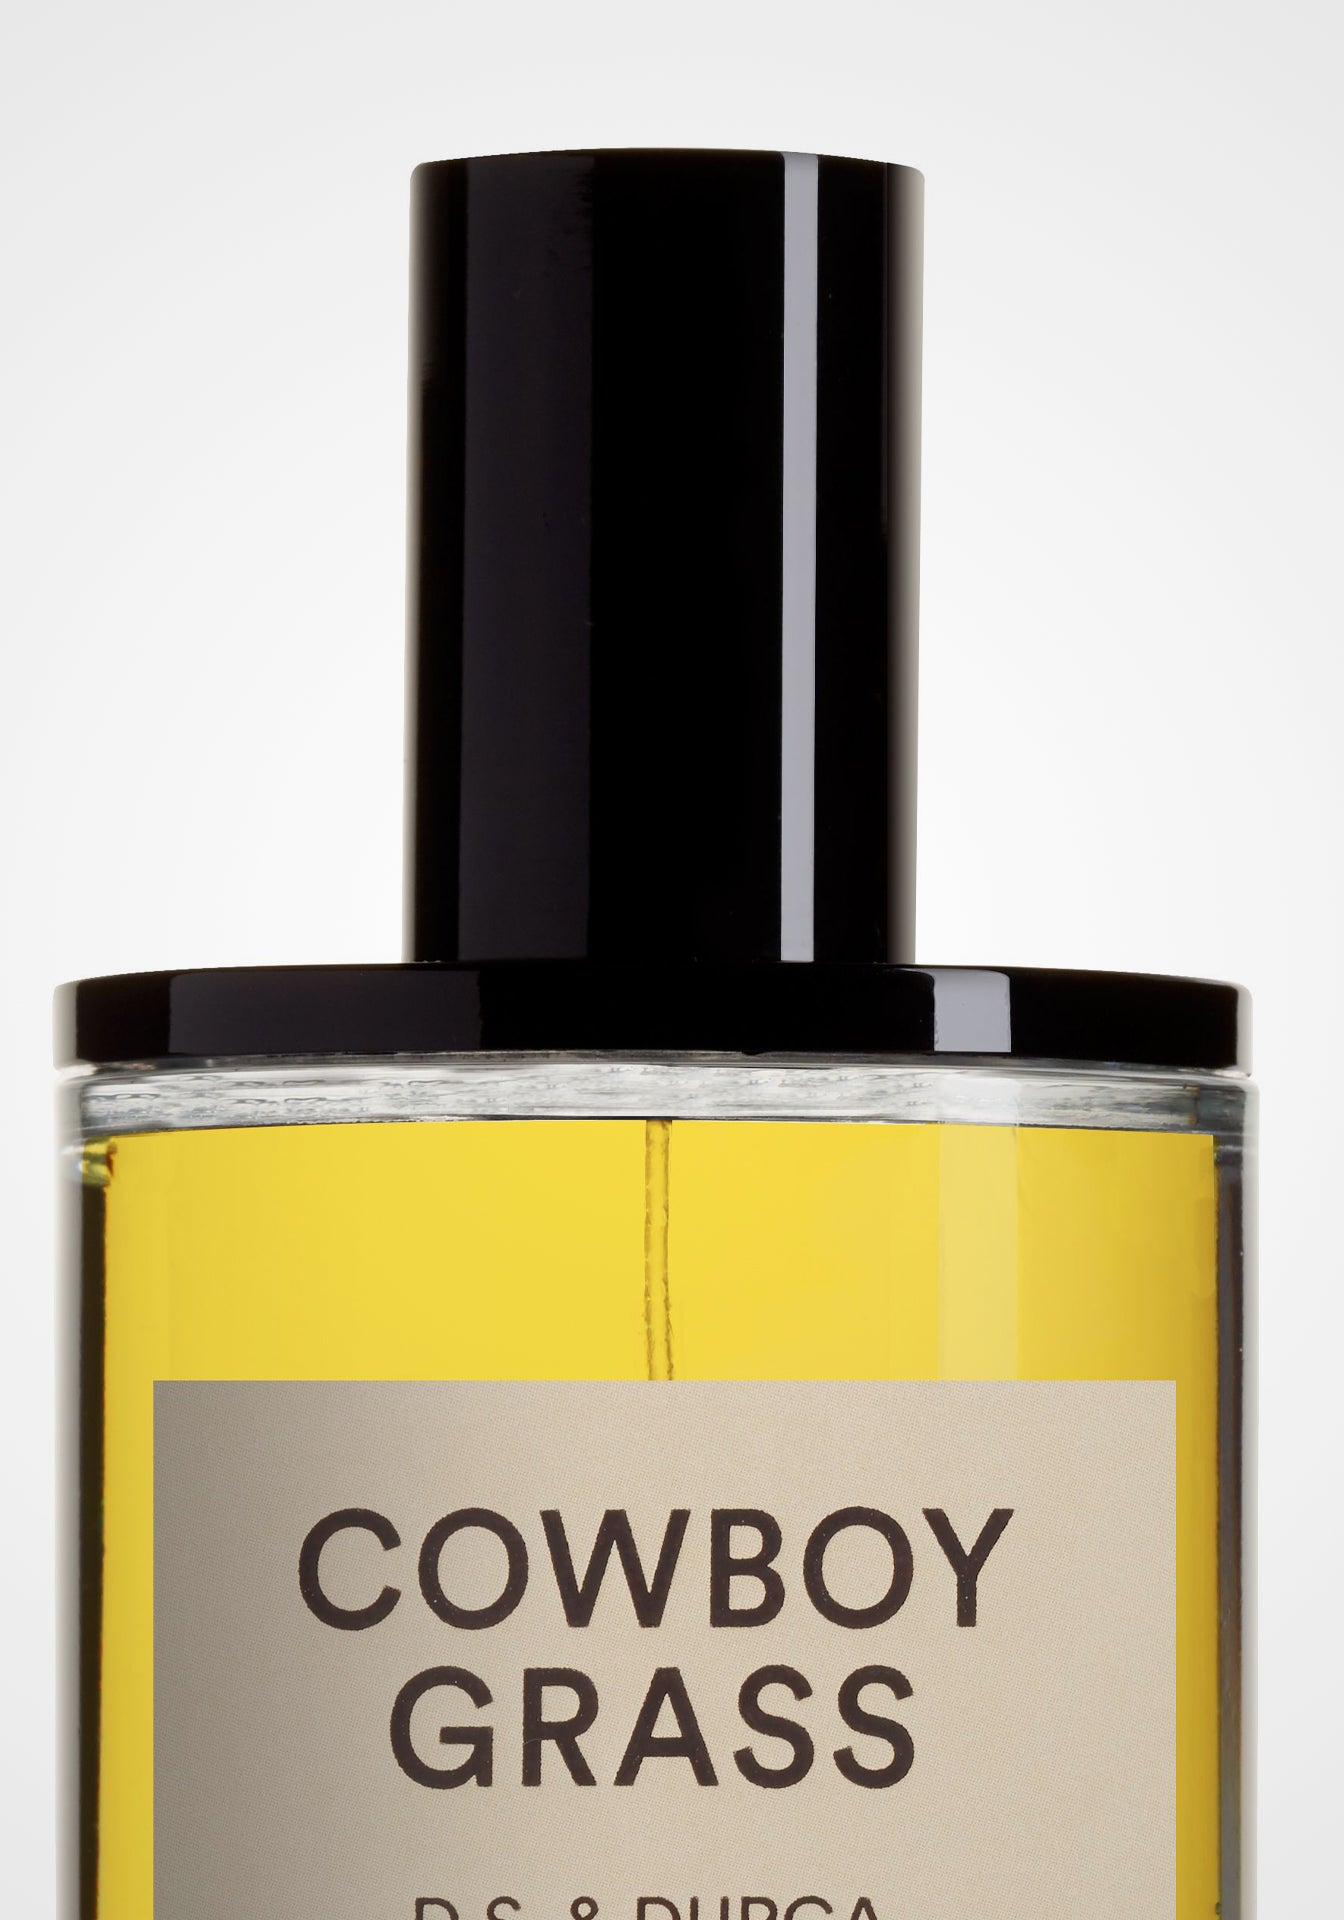 Cowboy Grass Eau De Parfum, 100ml